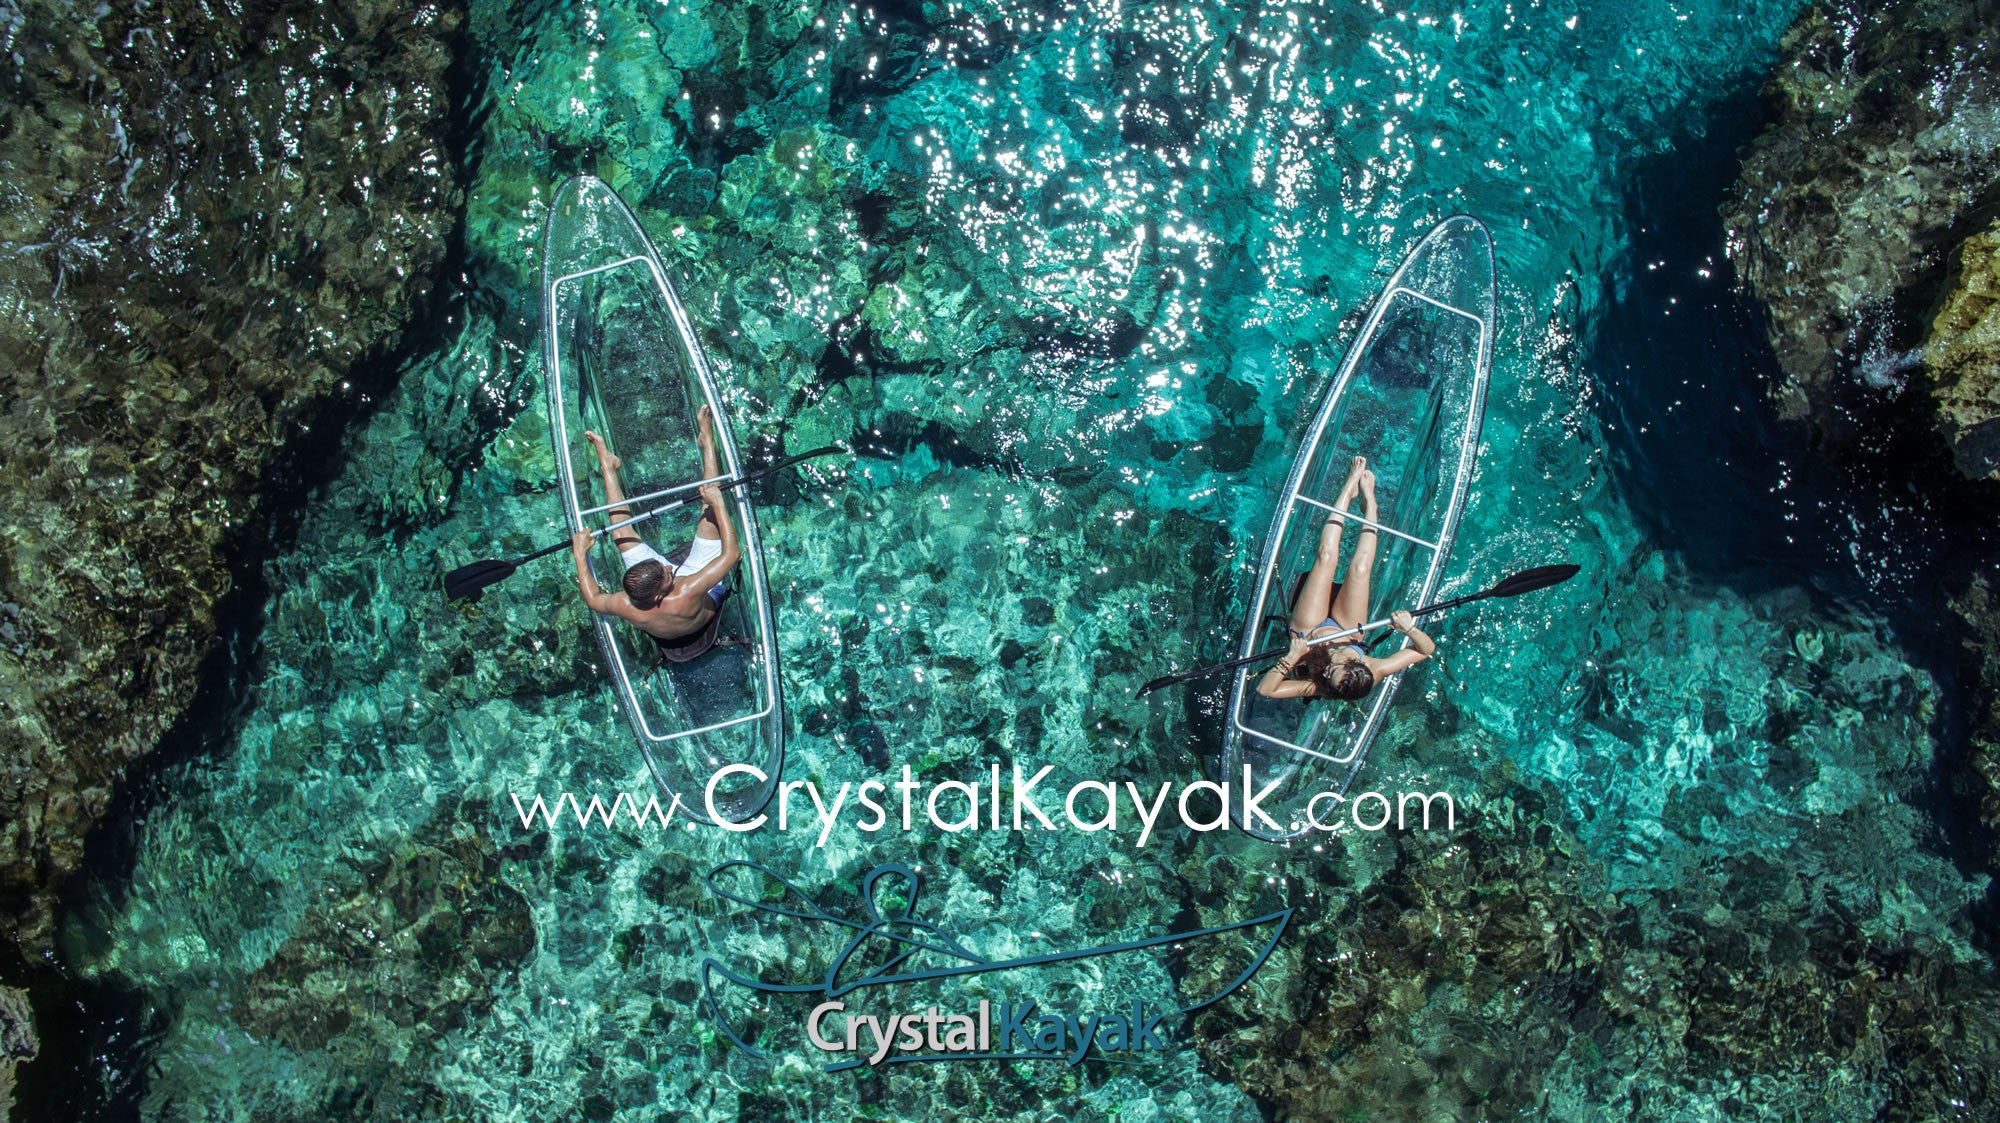 crystal explorer kayaks set of 5 by the crystal kayak company